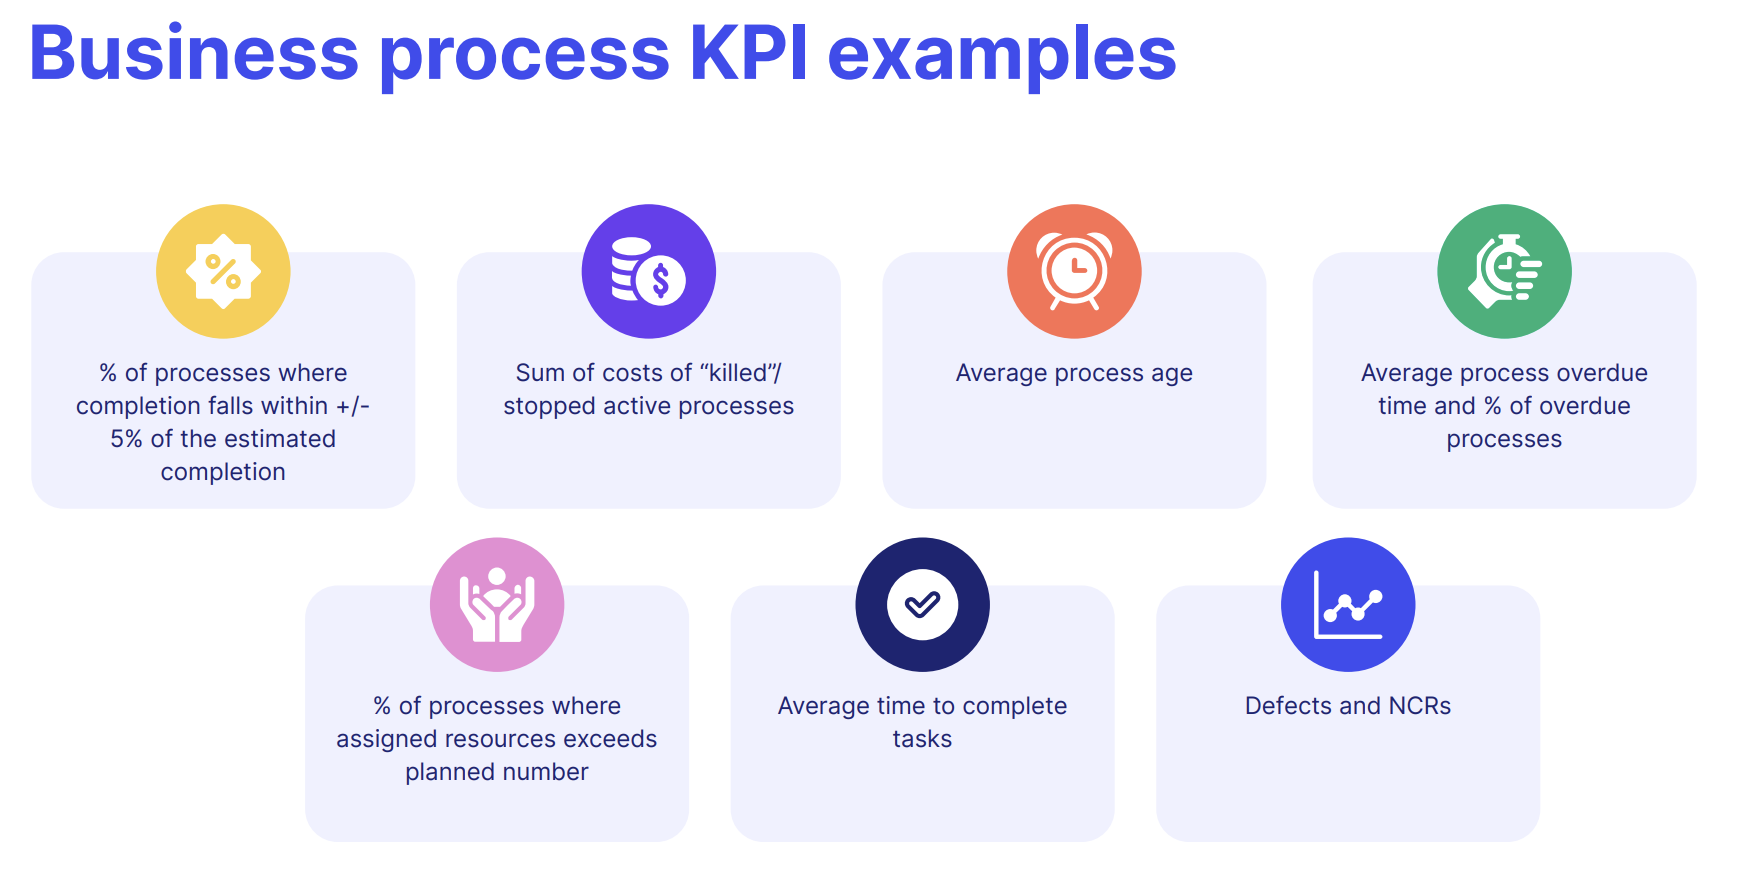 Quality assurance business process KPI examples